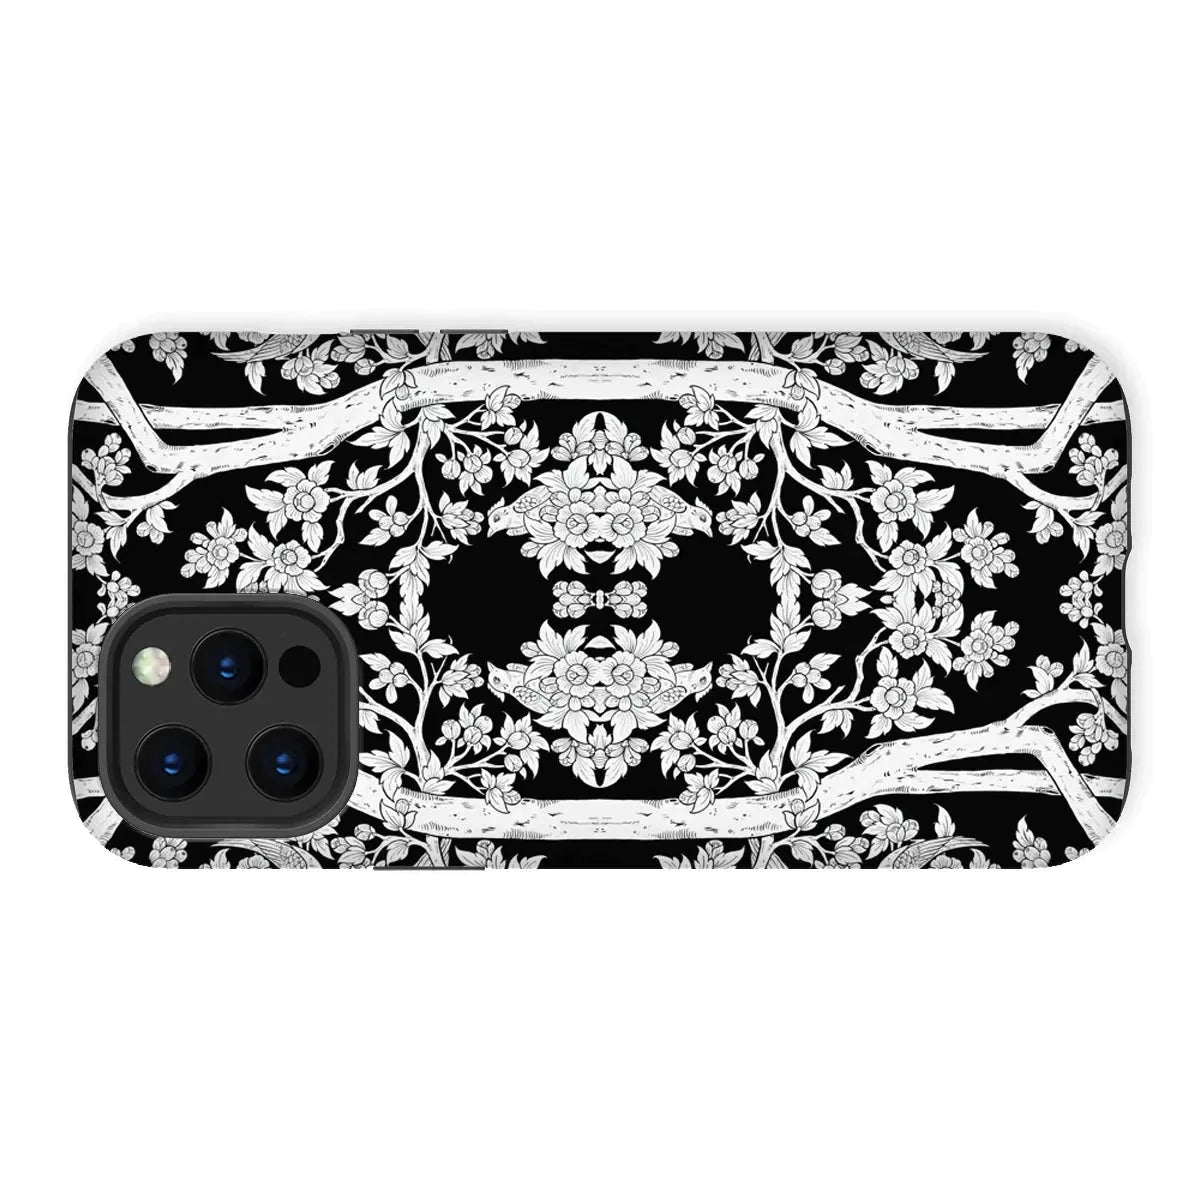 Black and White Aesthetic Art Phone Cases